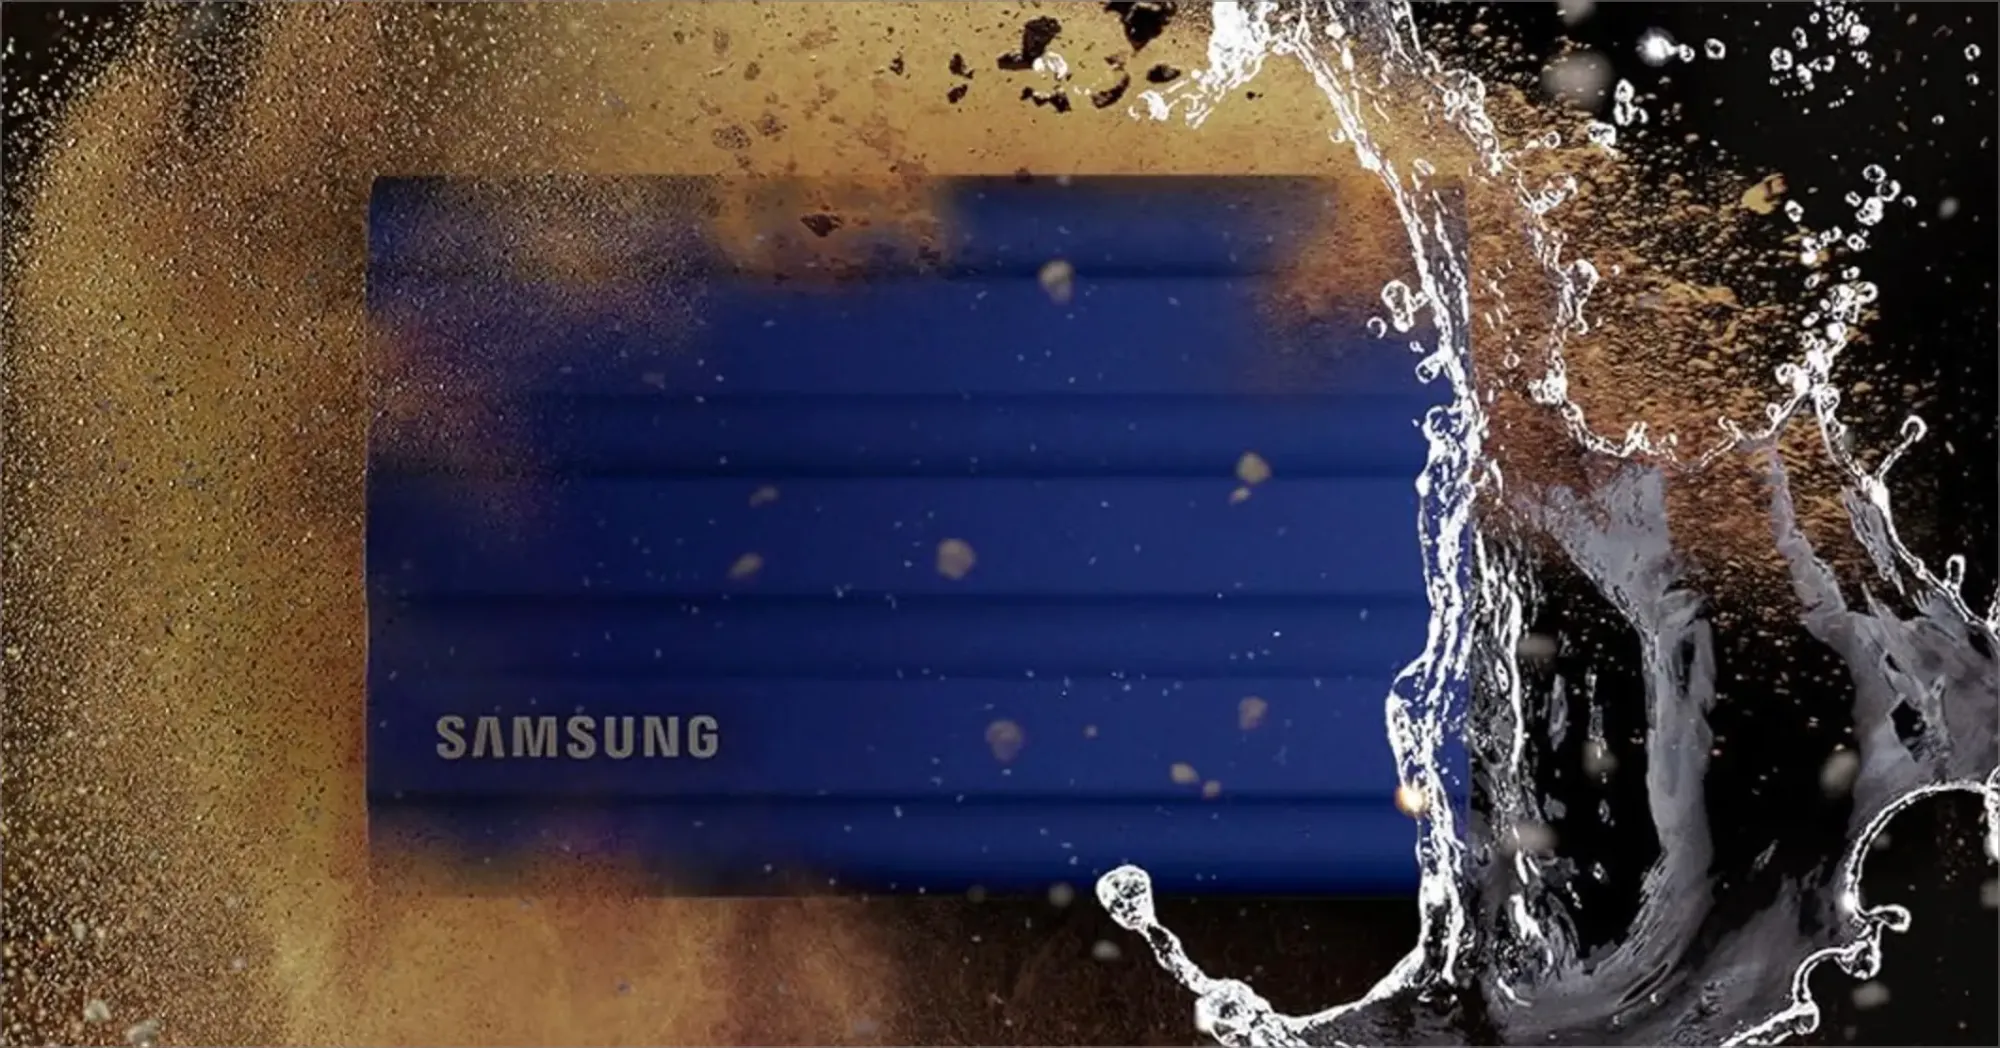 Samsung T7 Shield SSD